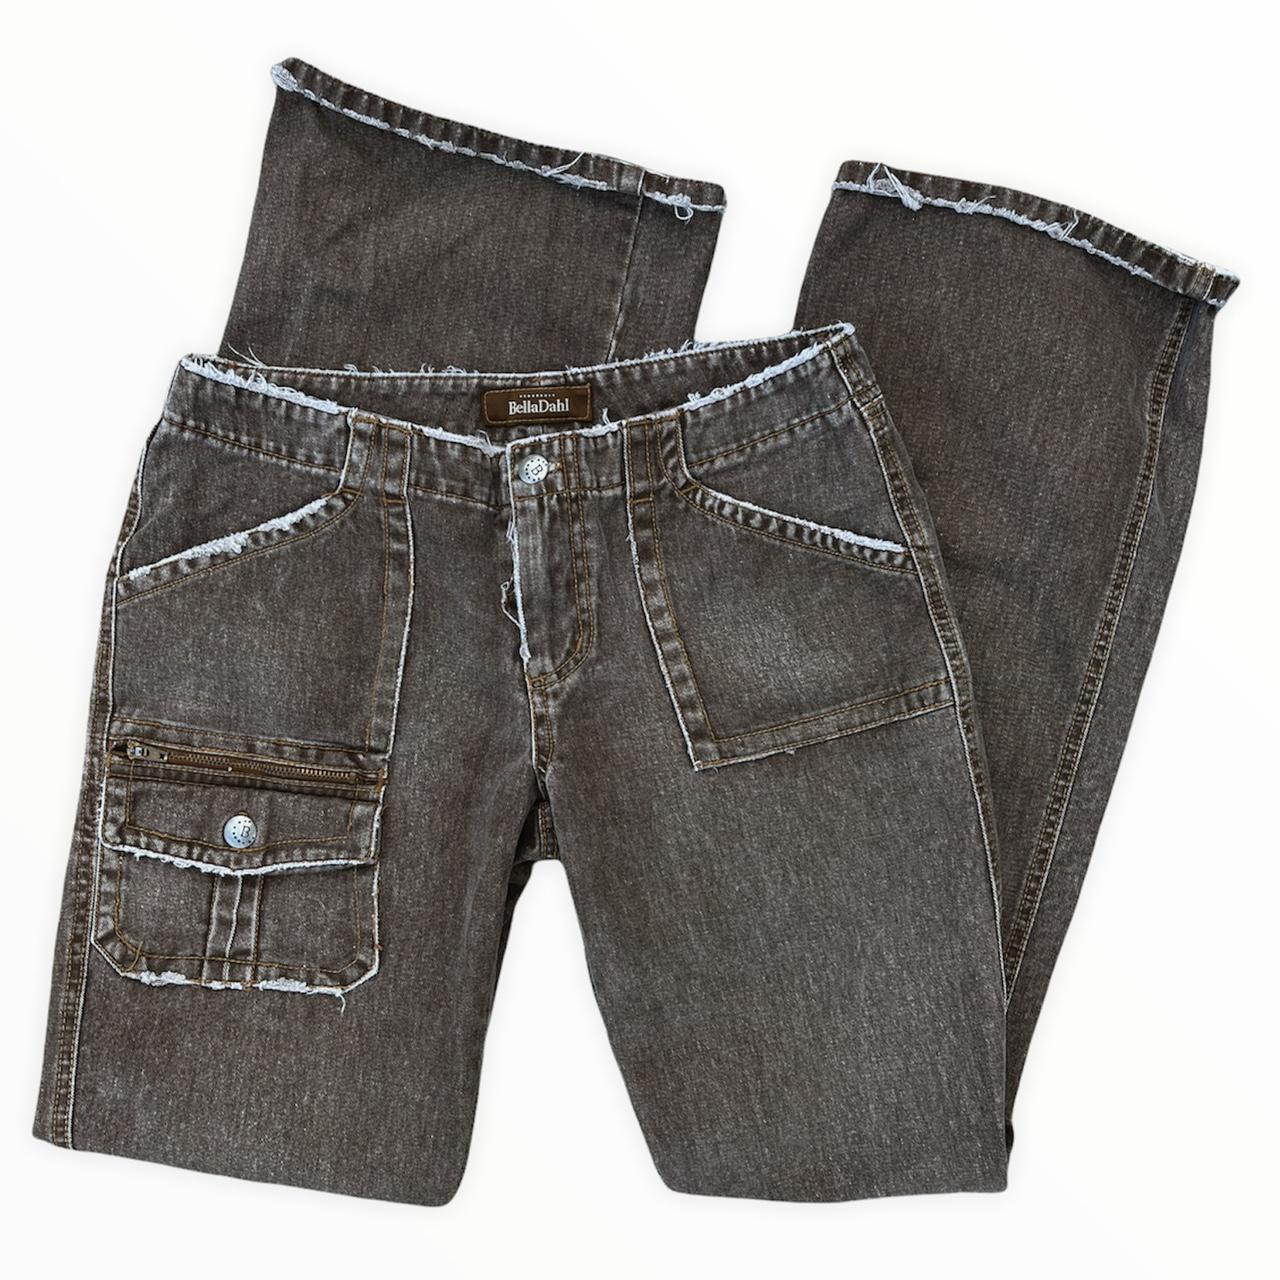 Product Image 1 - Brown Flared Pants

•Women’s Vintage BellaDahl